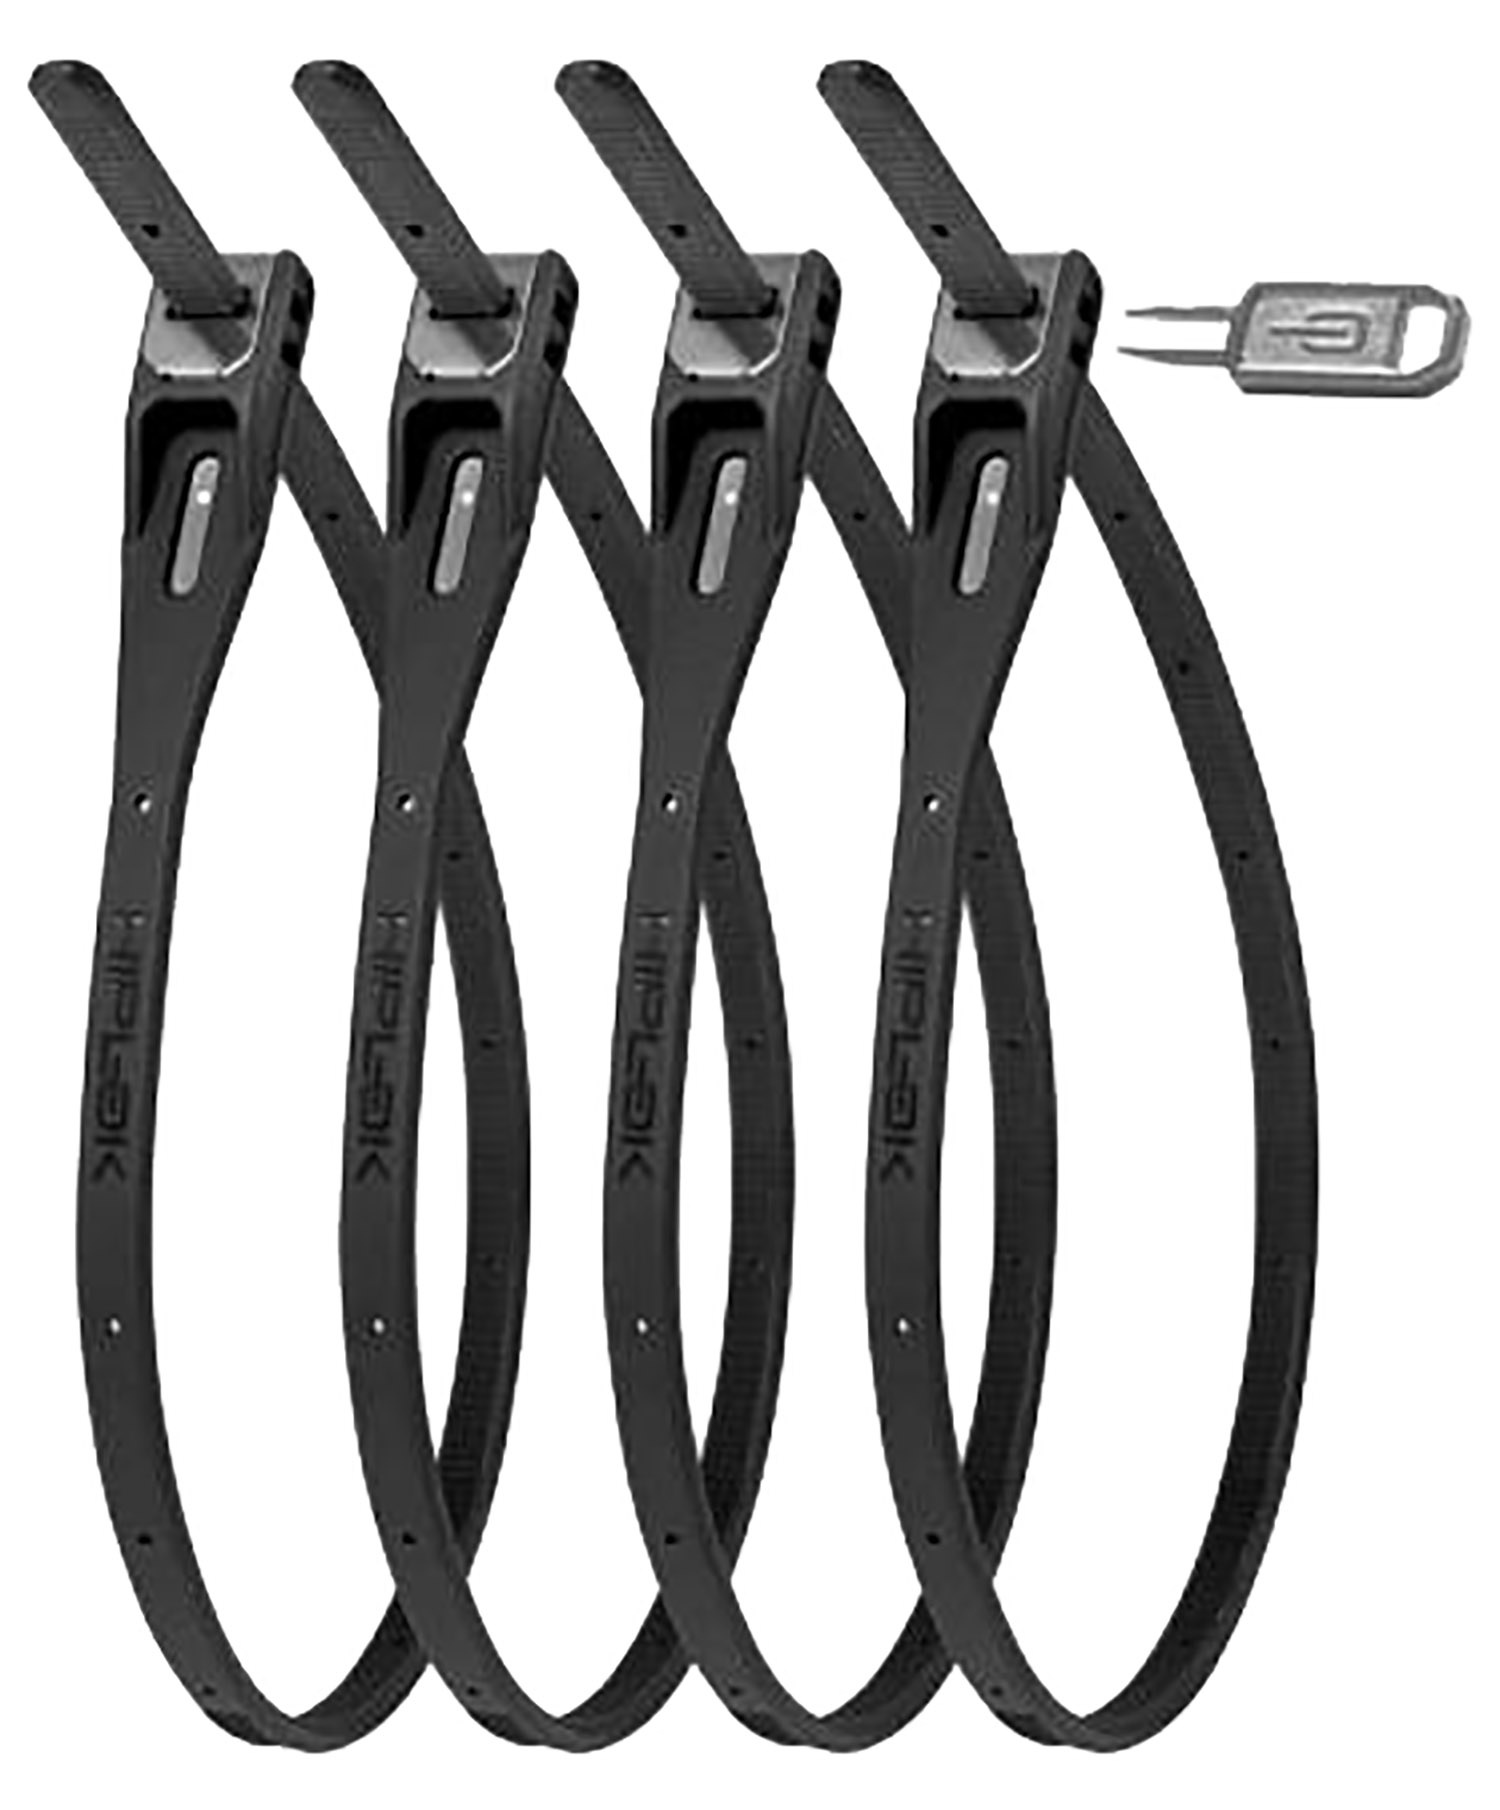 Tilbehør - Cykellås - HIPLOK Z LOK, 4 pack Cable lock - Sort